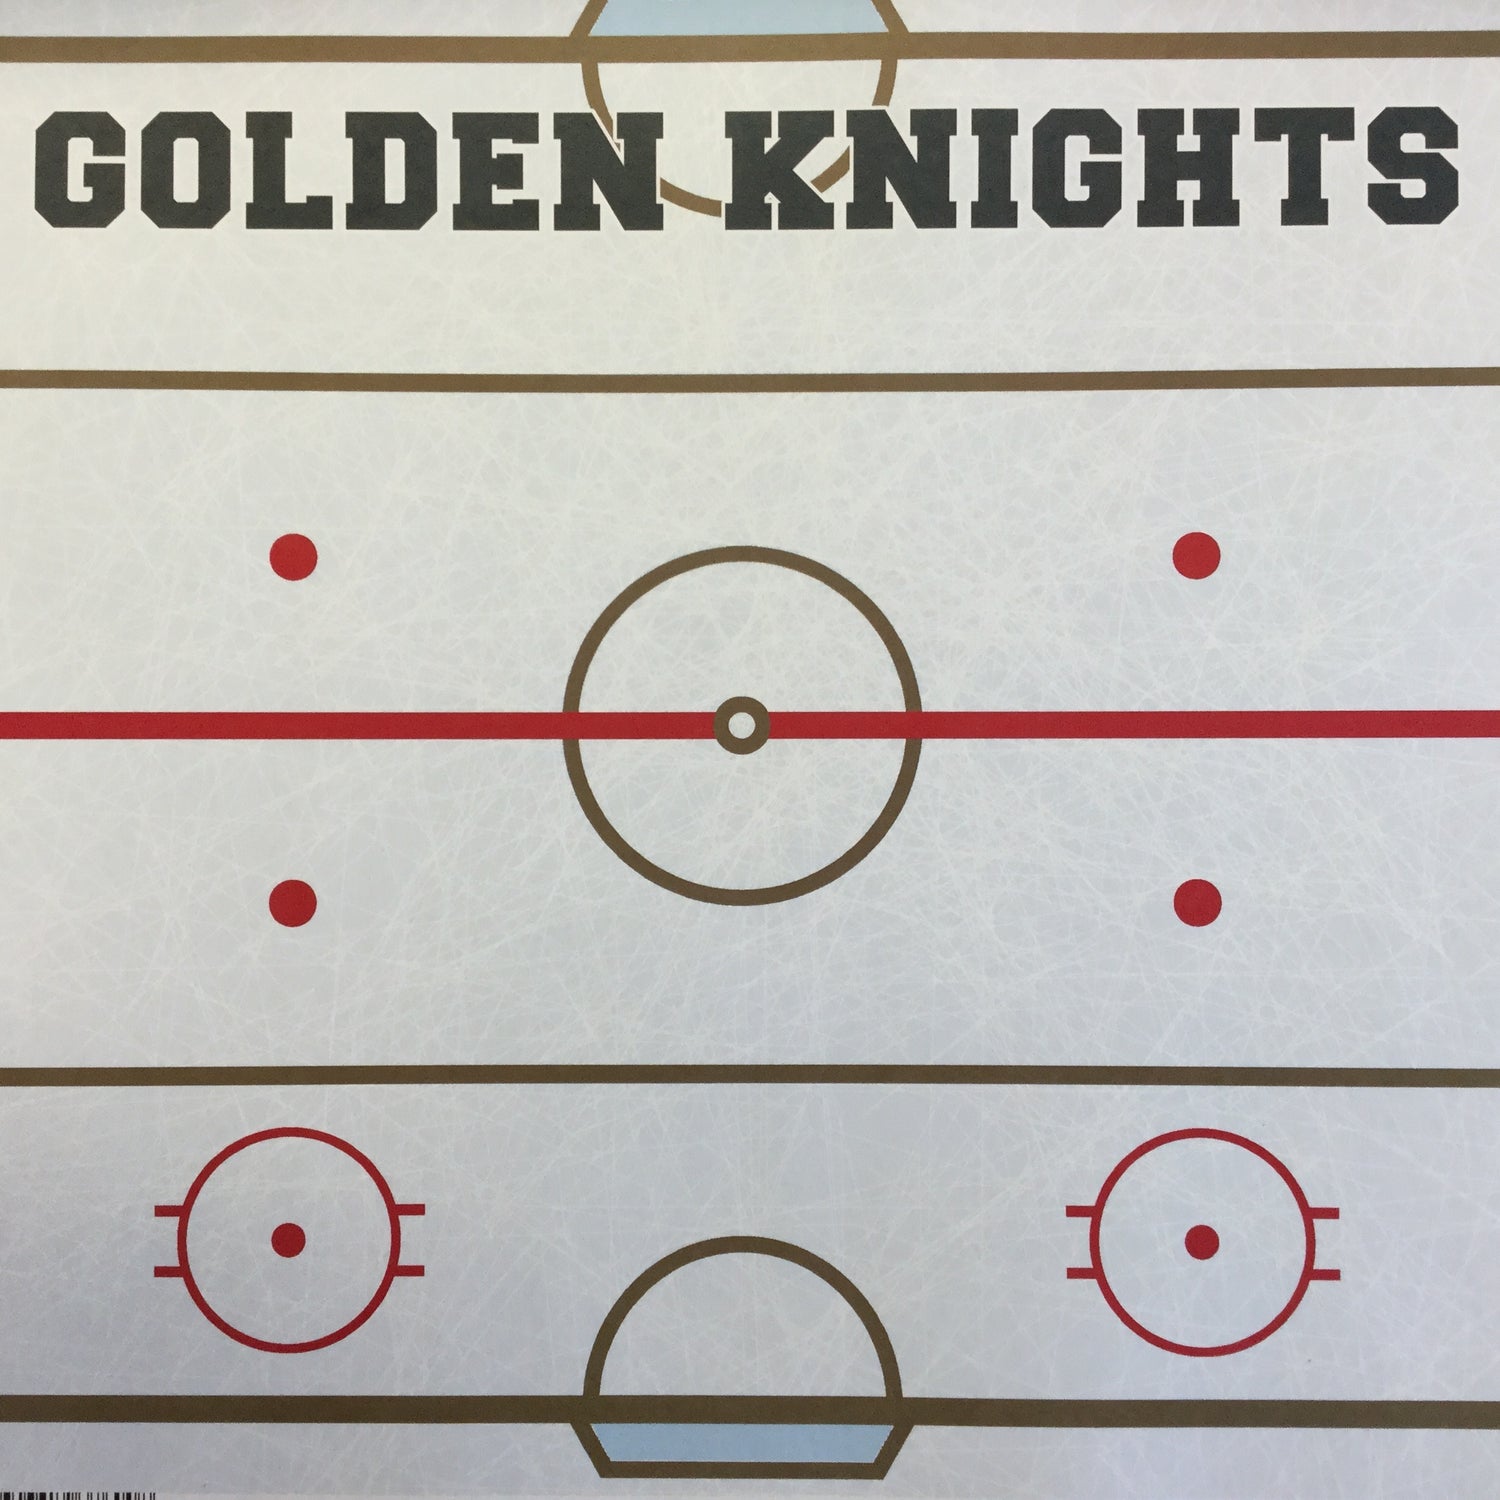 Golden Knights PRIDE HOCKEY KIT 12&quot;X12&quot; Scrapbook Paper 12 Sheets